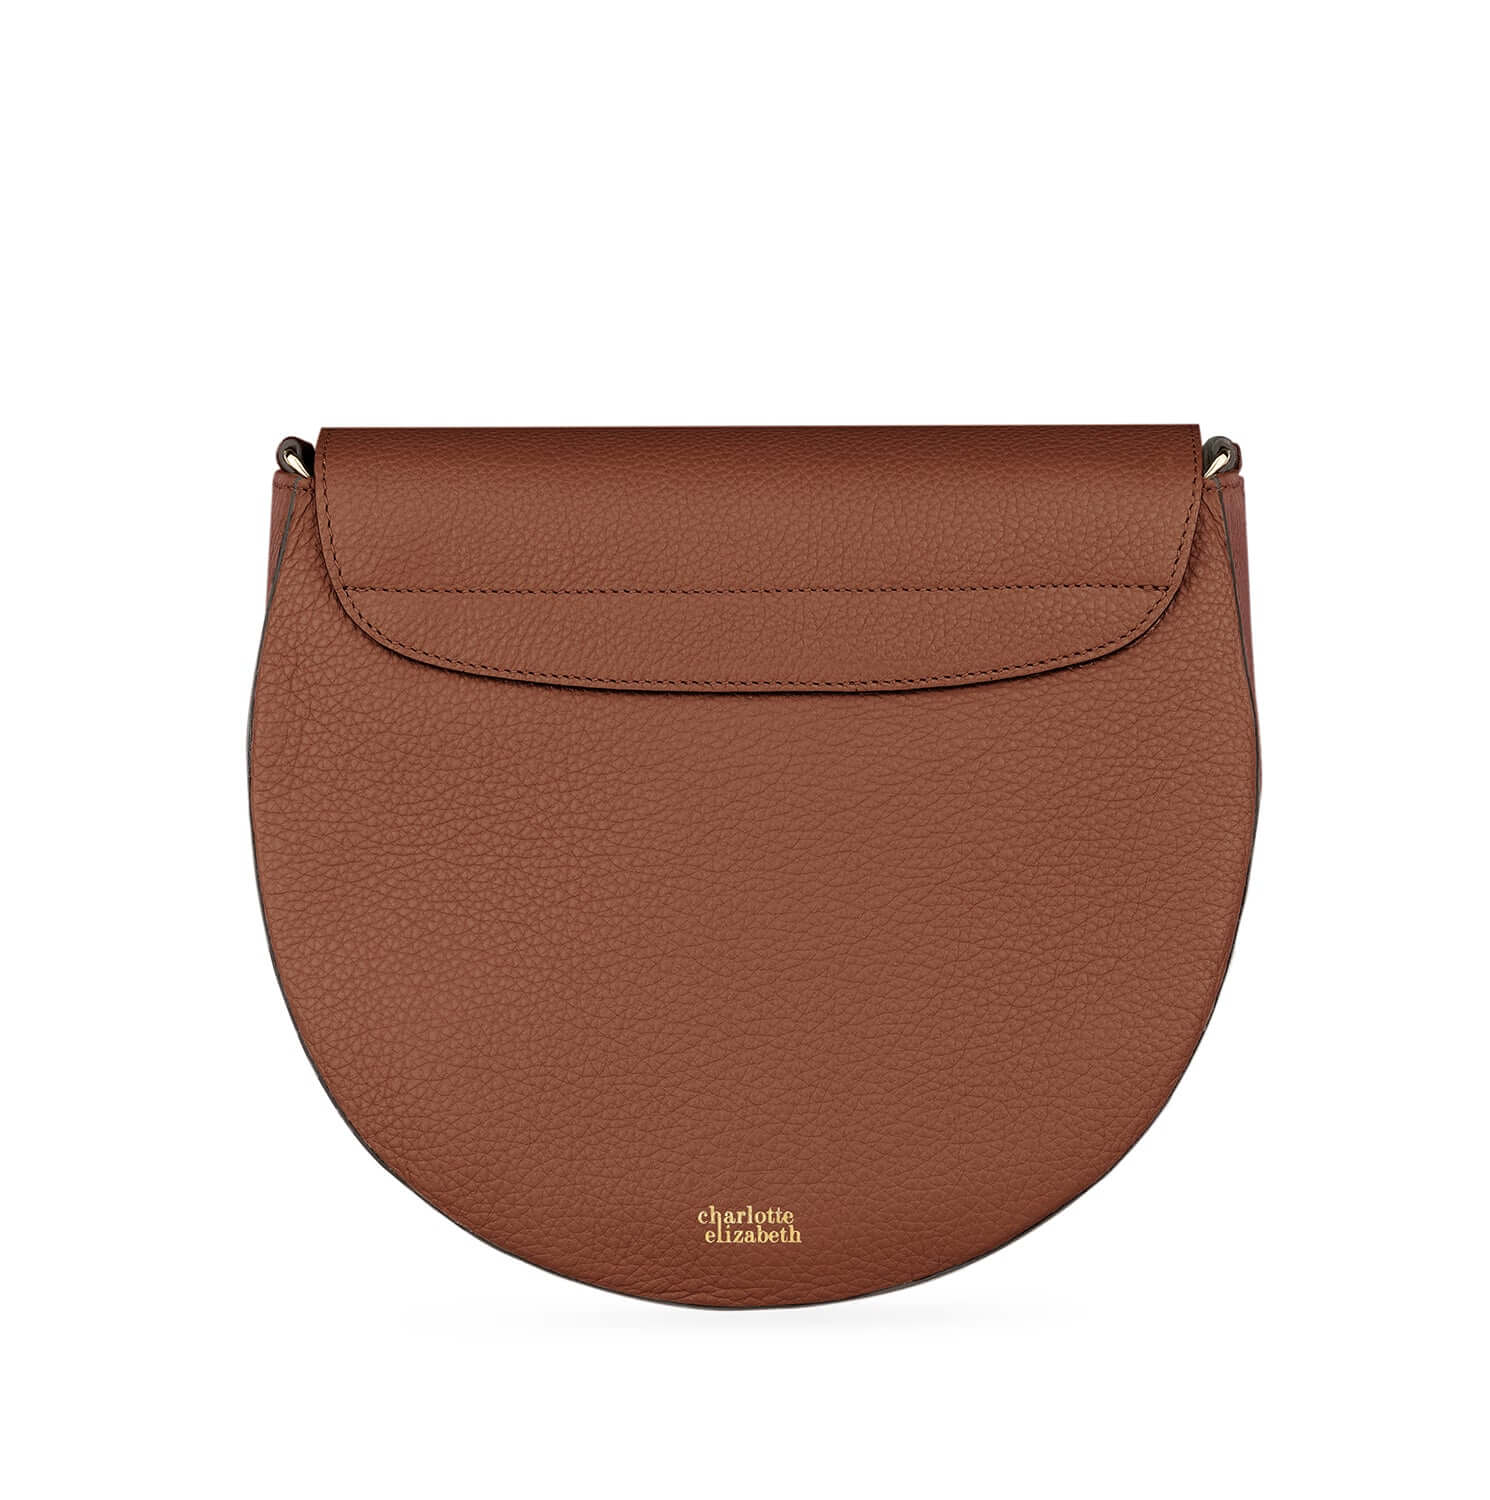 tan brown leather handbag charlotte elizabeth half moon bag